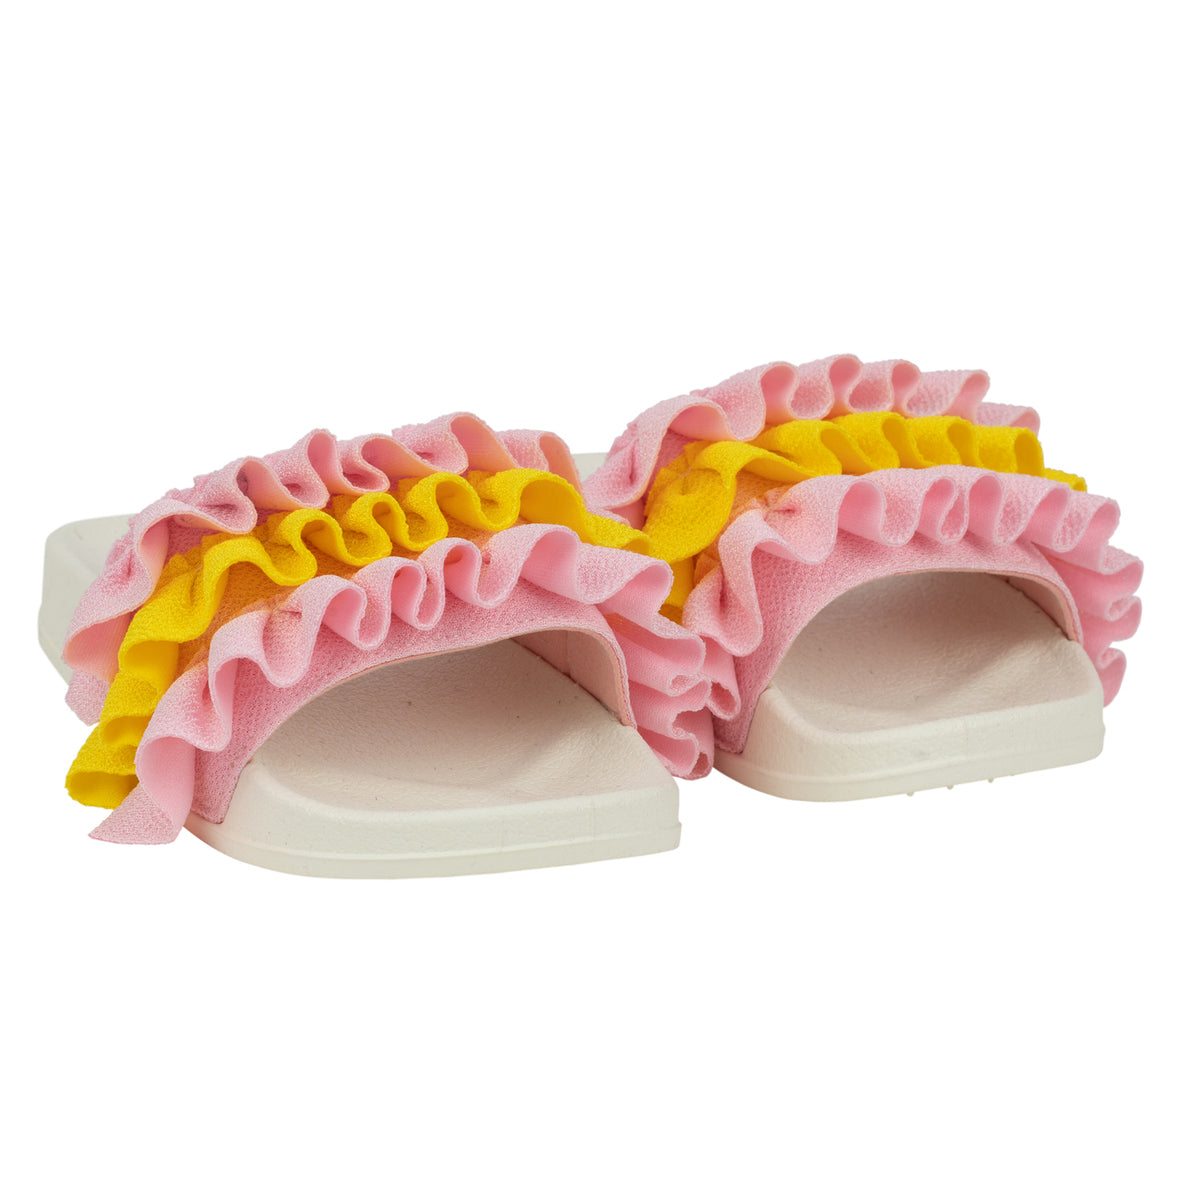 A Dee Girls 'Frill' Pink & Yellow Frill Sliders